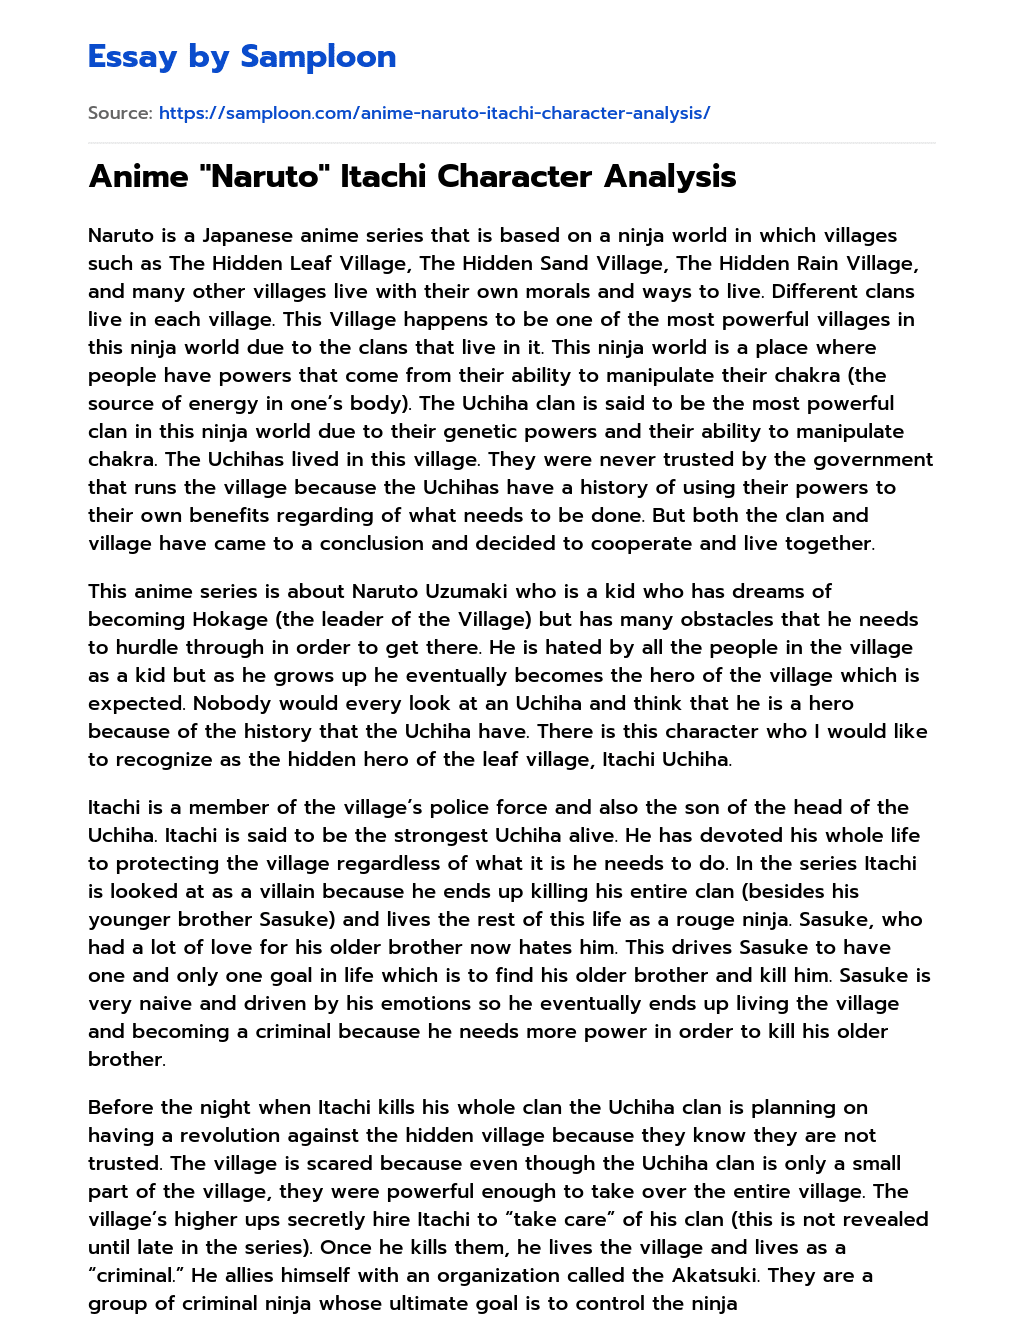 Anime “Naruto” Itachi Character Analysis essay